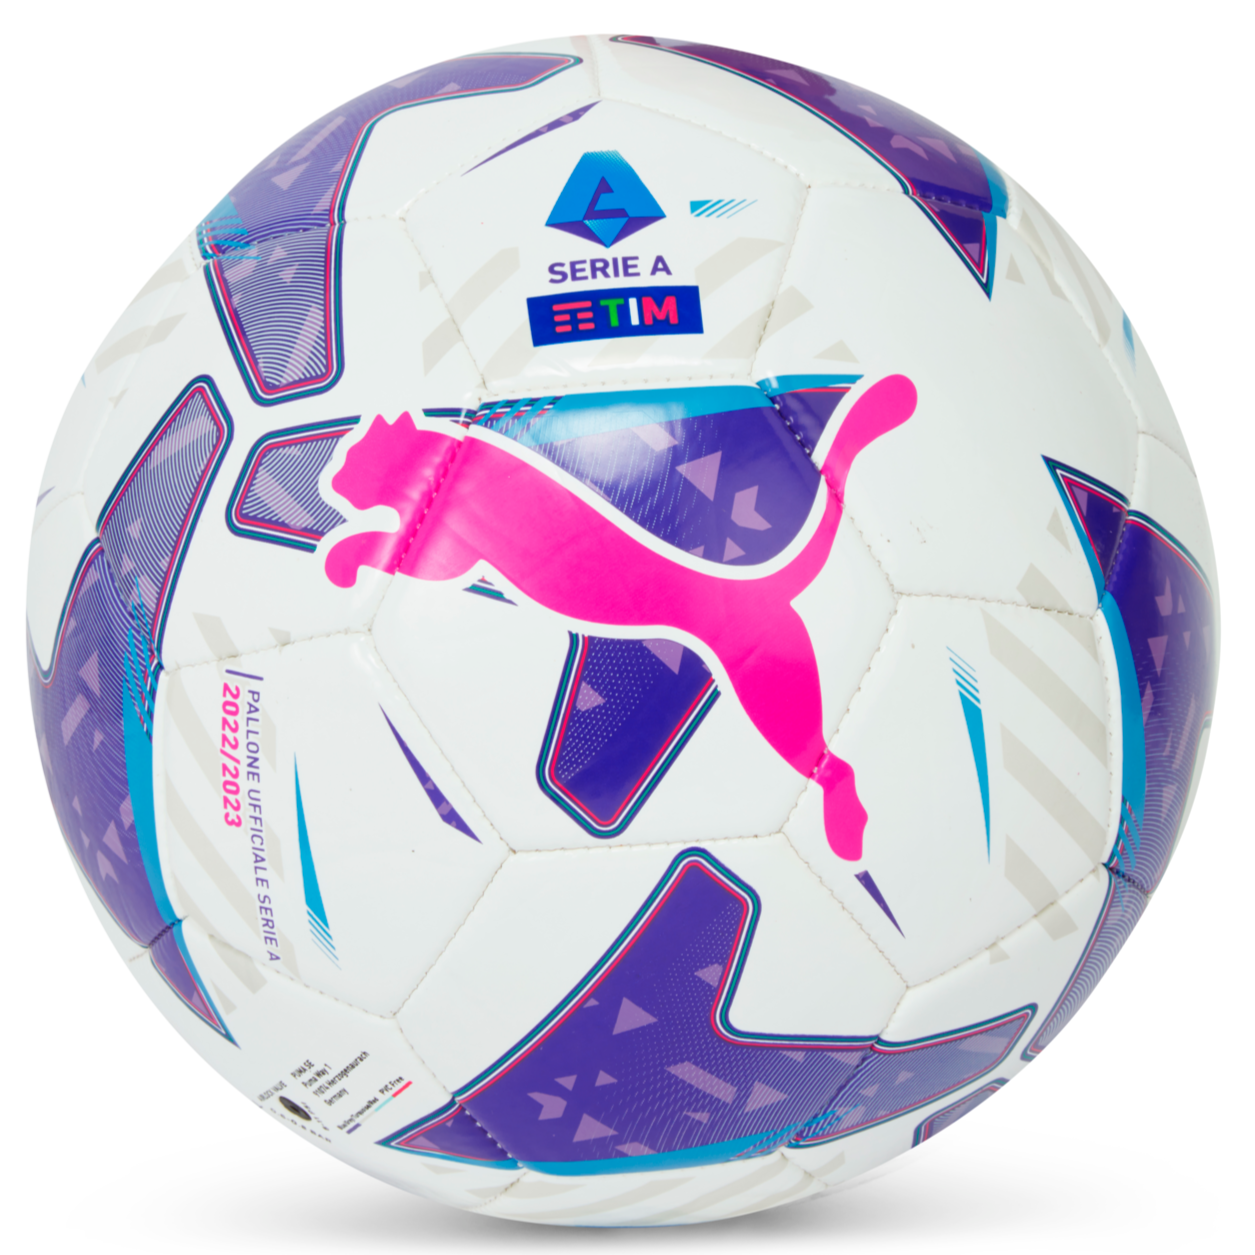 Puma Orbita Serie A MS Soccer Ball 22-23